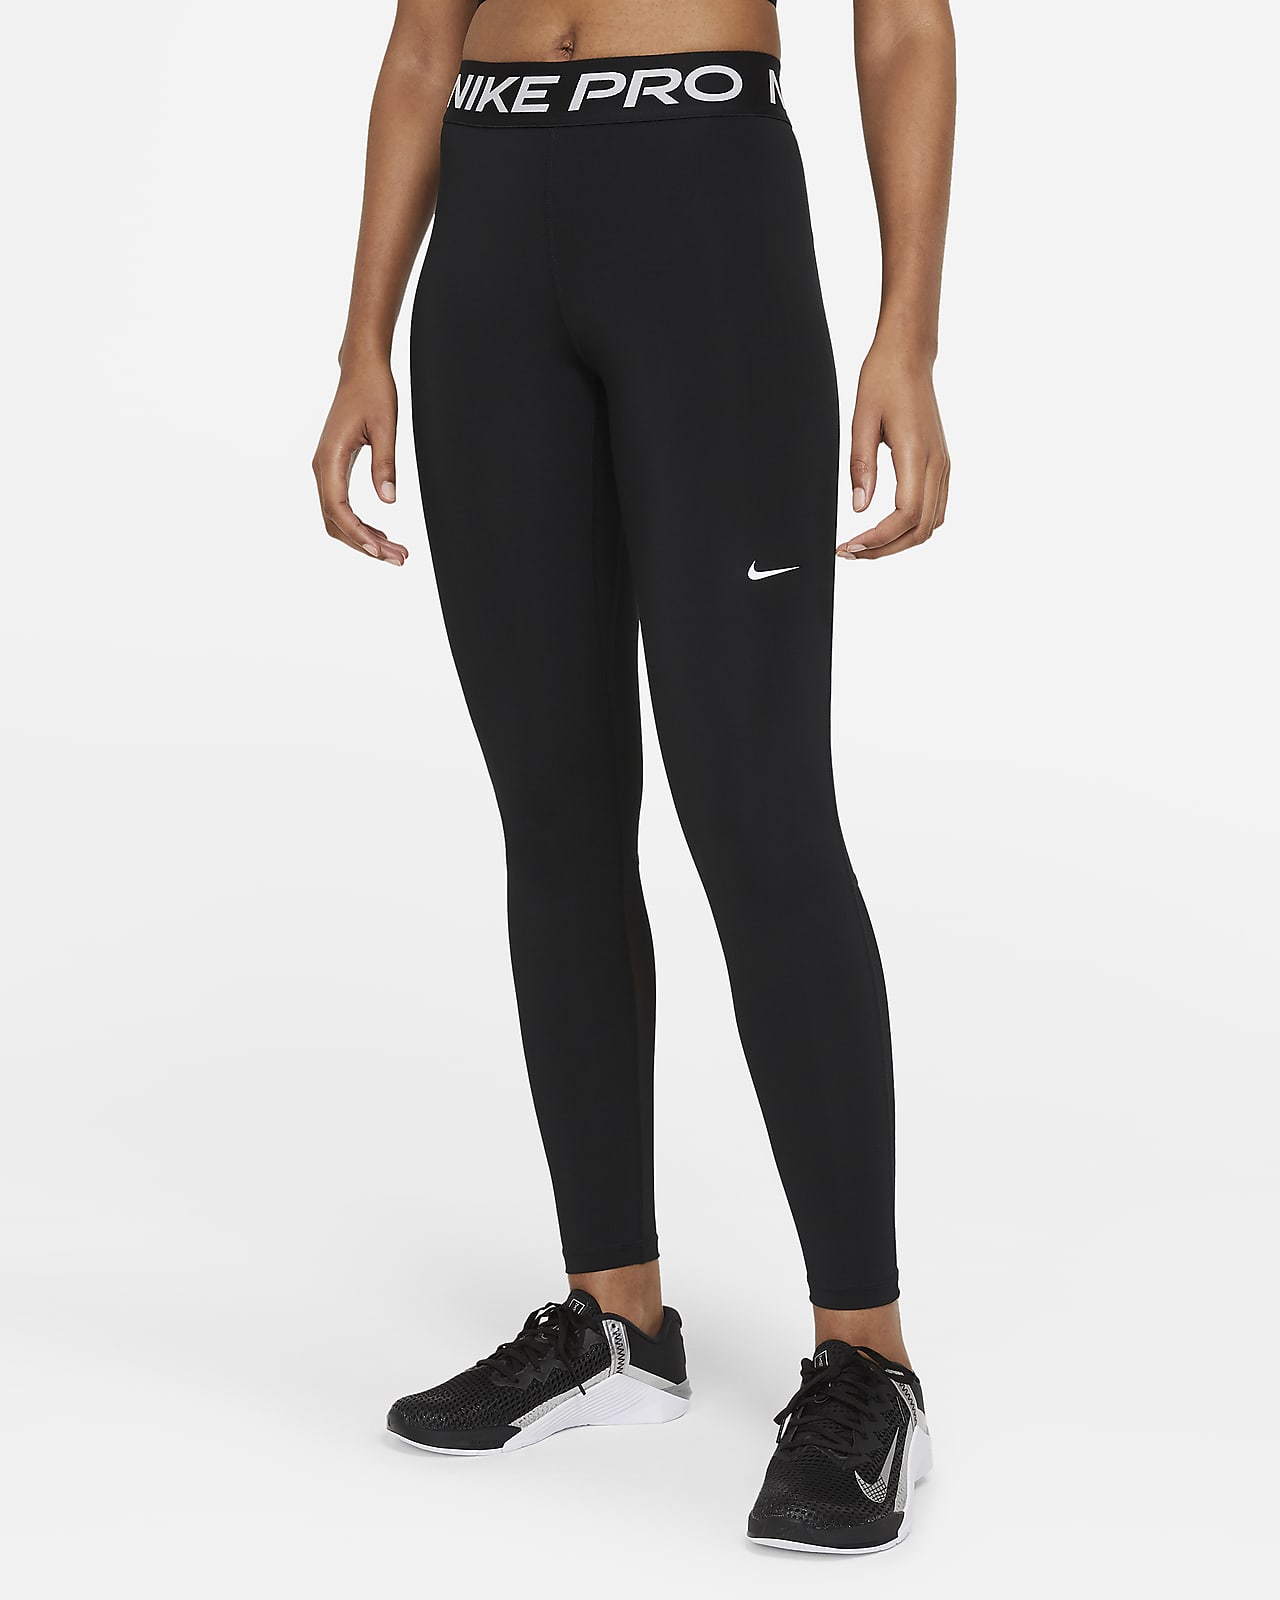 Nike Pro Women's Tights. Nike BE